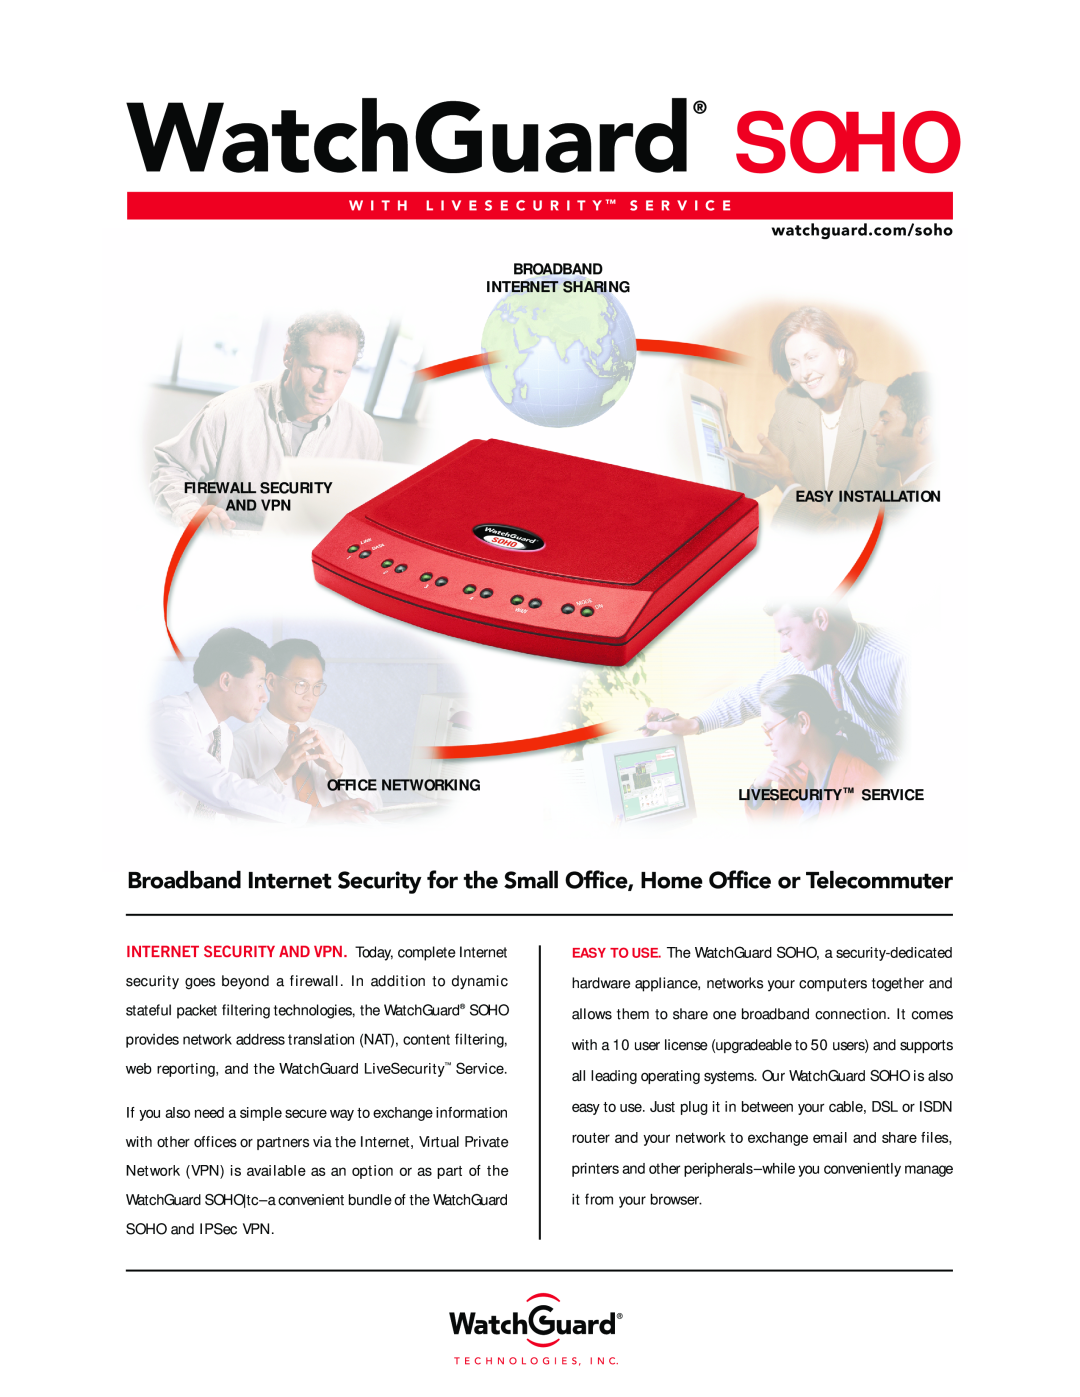 WatchGuard Technologies WG2500 manual W I T H L I V E S E C U R I T Y S E R V I C E, Firewall Security, Easy Installation 